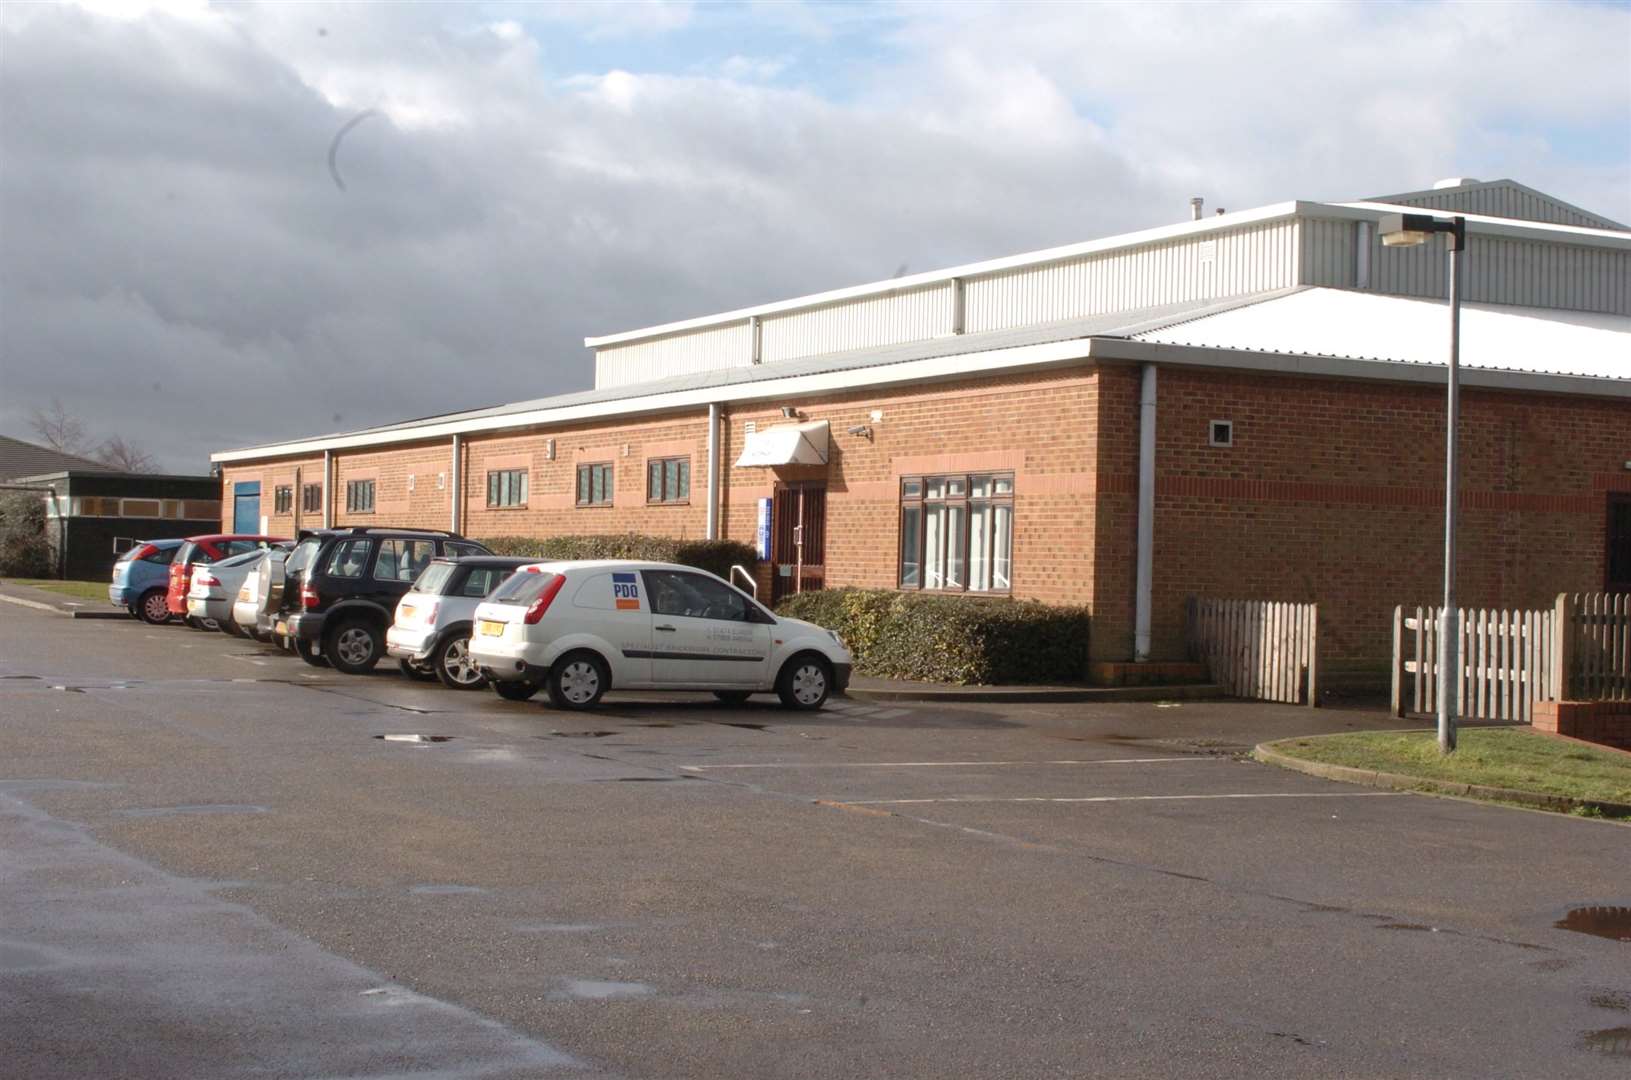 Meopham Leisure Centre could close